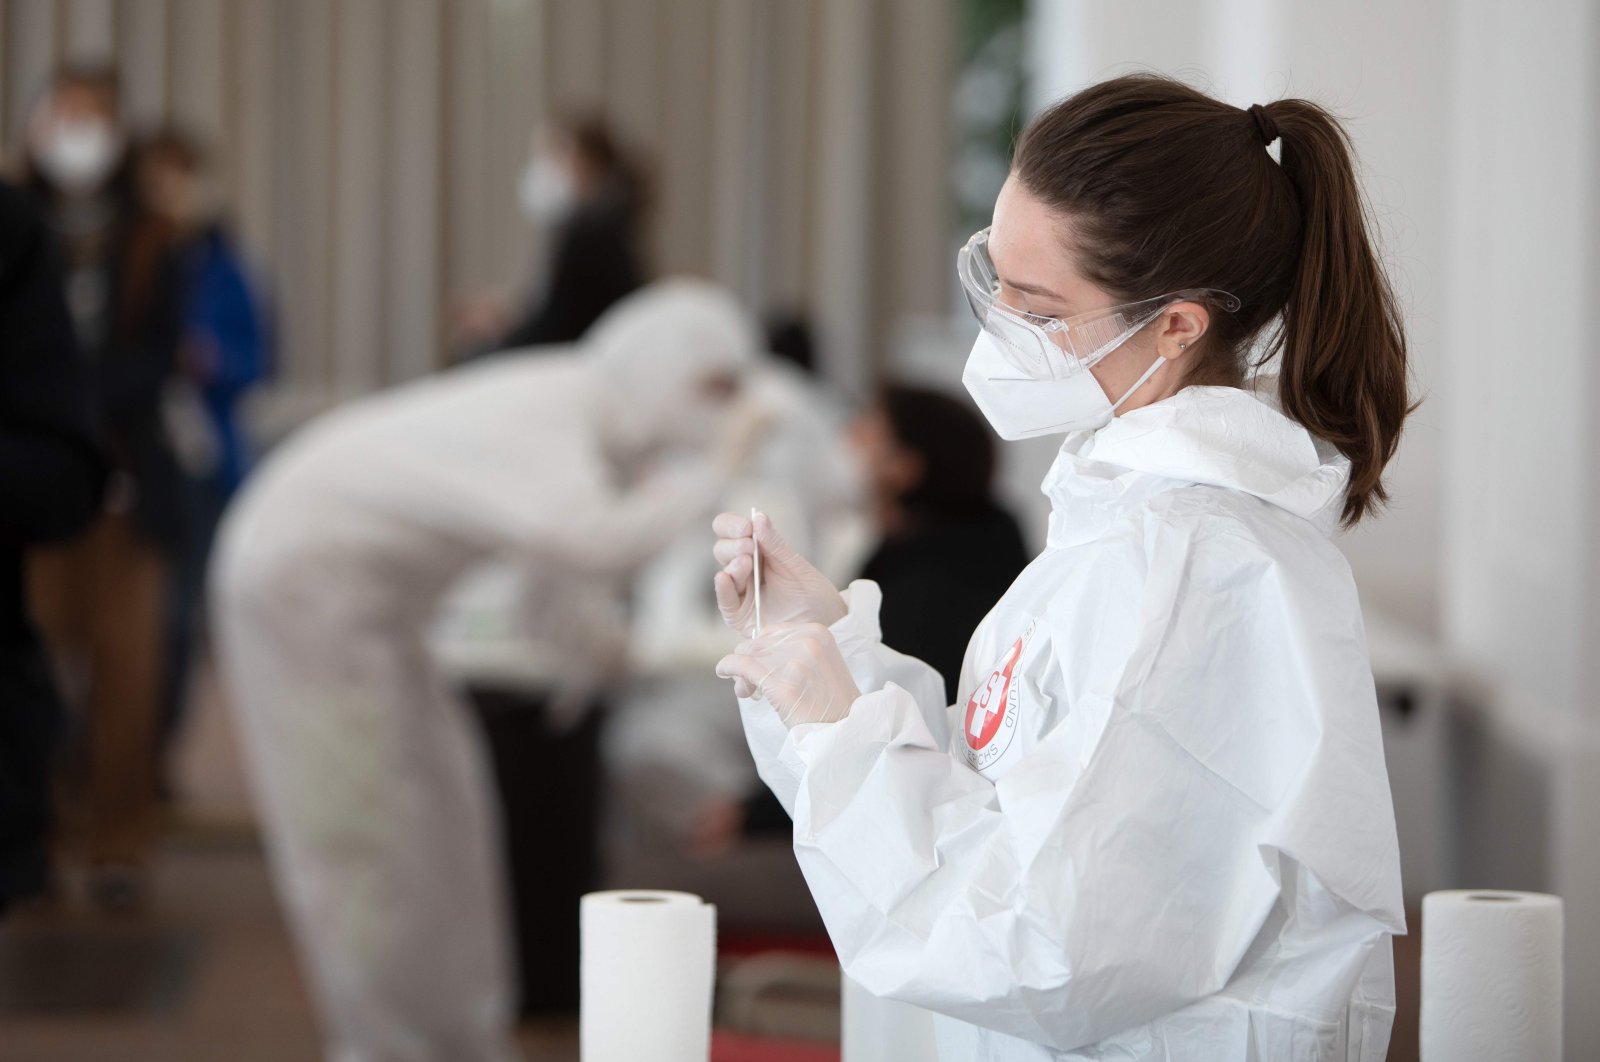 A health worker prepares a coronavirus antigen rapid test at the new coronavirus test center in the Orangery of the Schoenbrunn Palace, Austria, on Feb. 4, 2021. (AFP Photo)